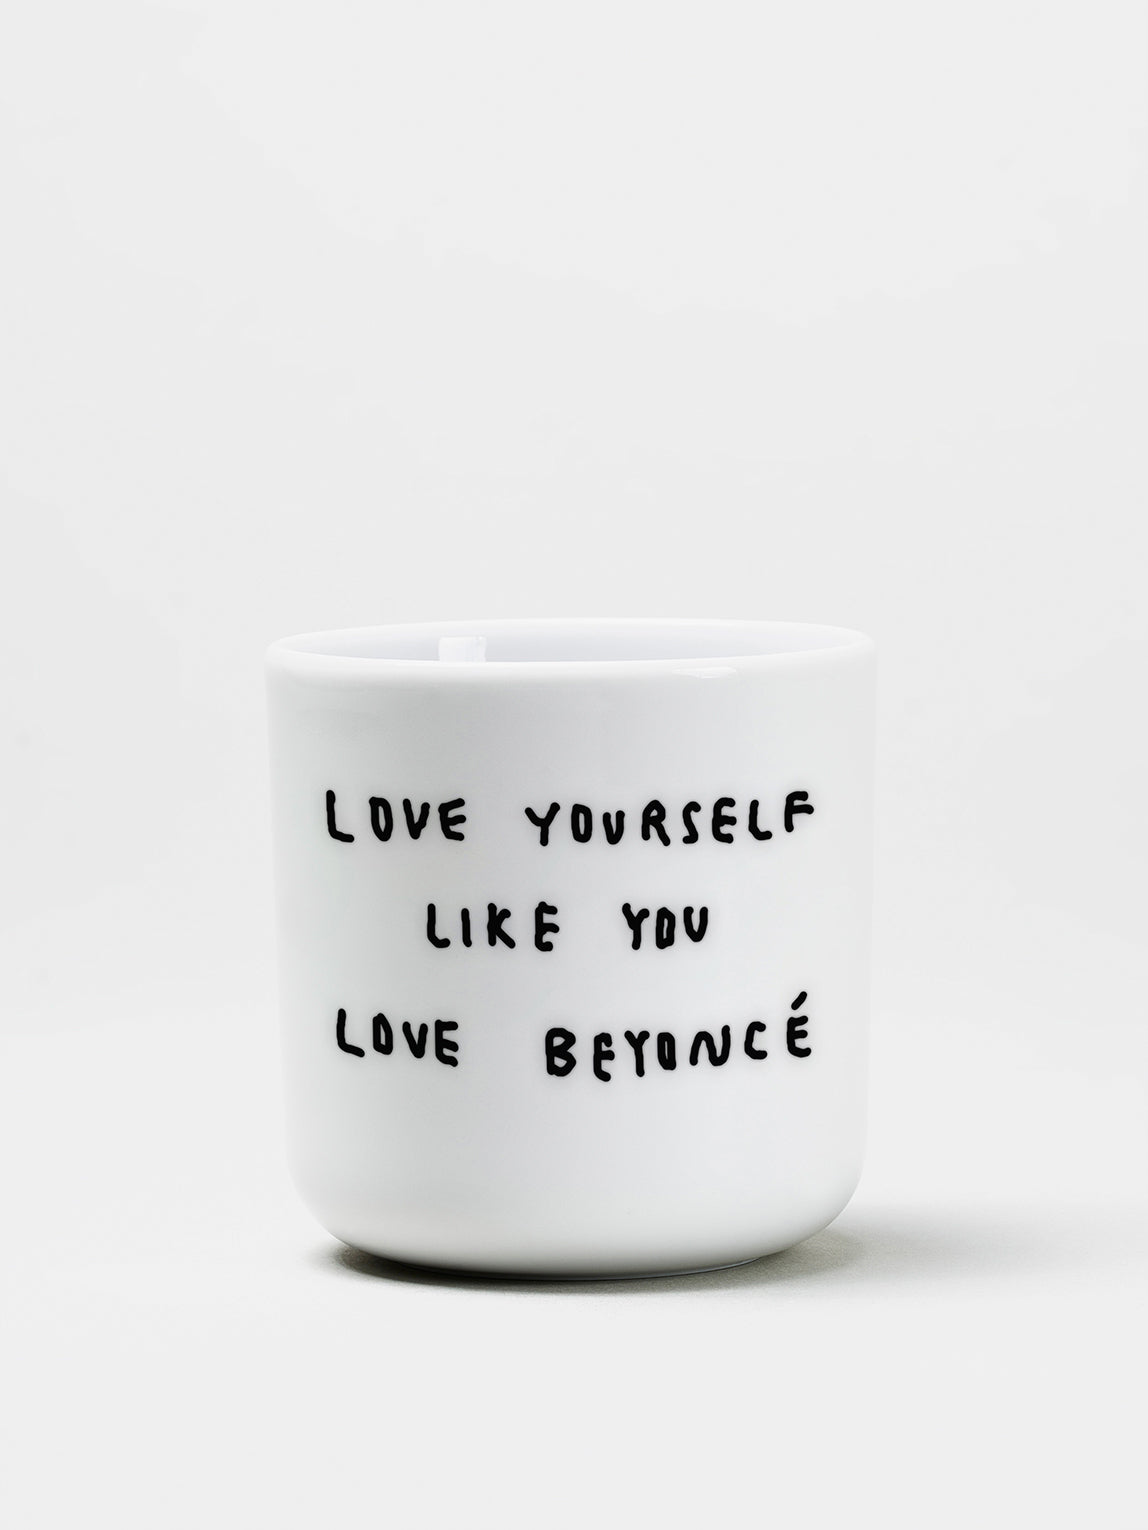 Love yourself like you love beyoncé